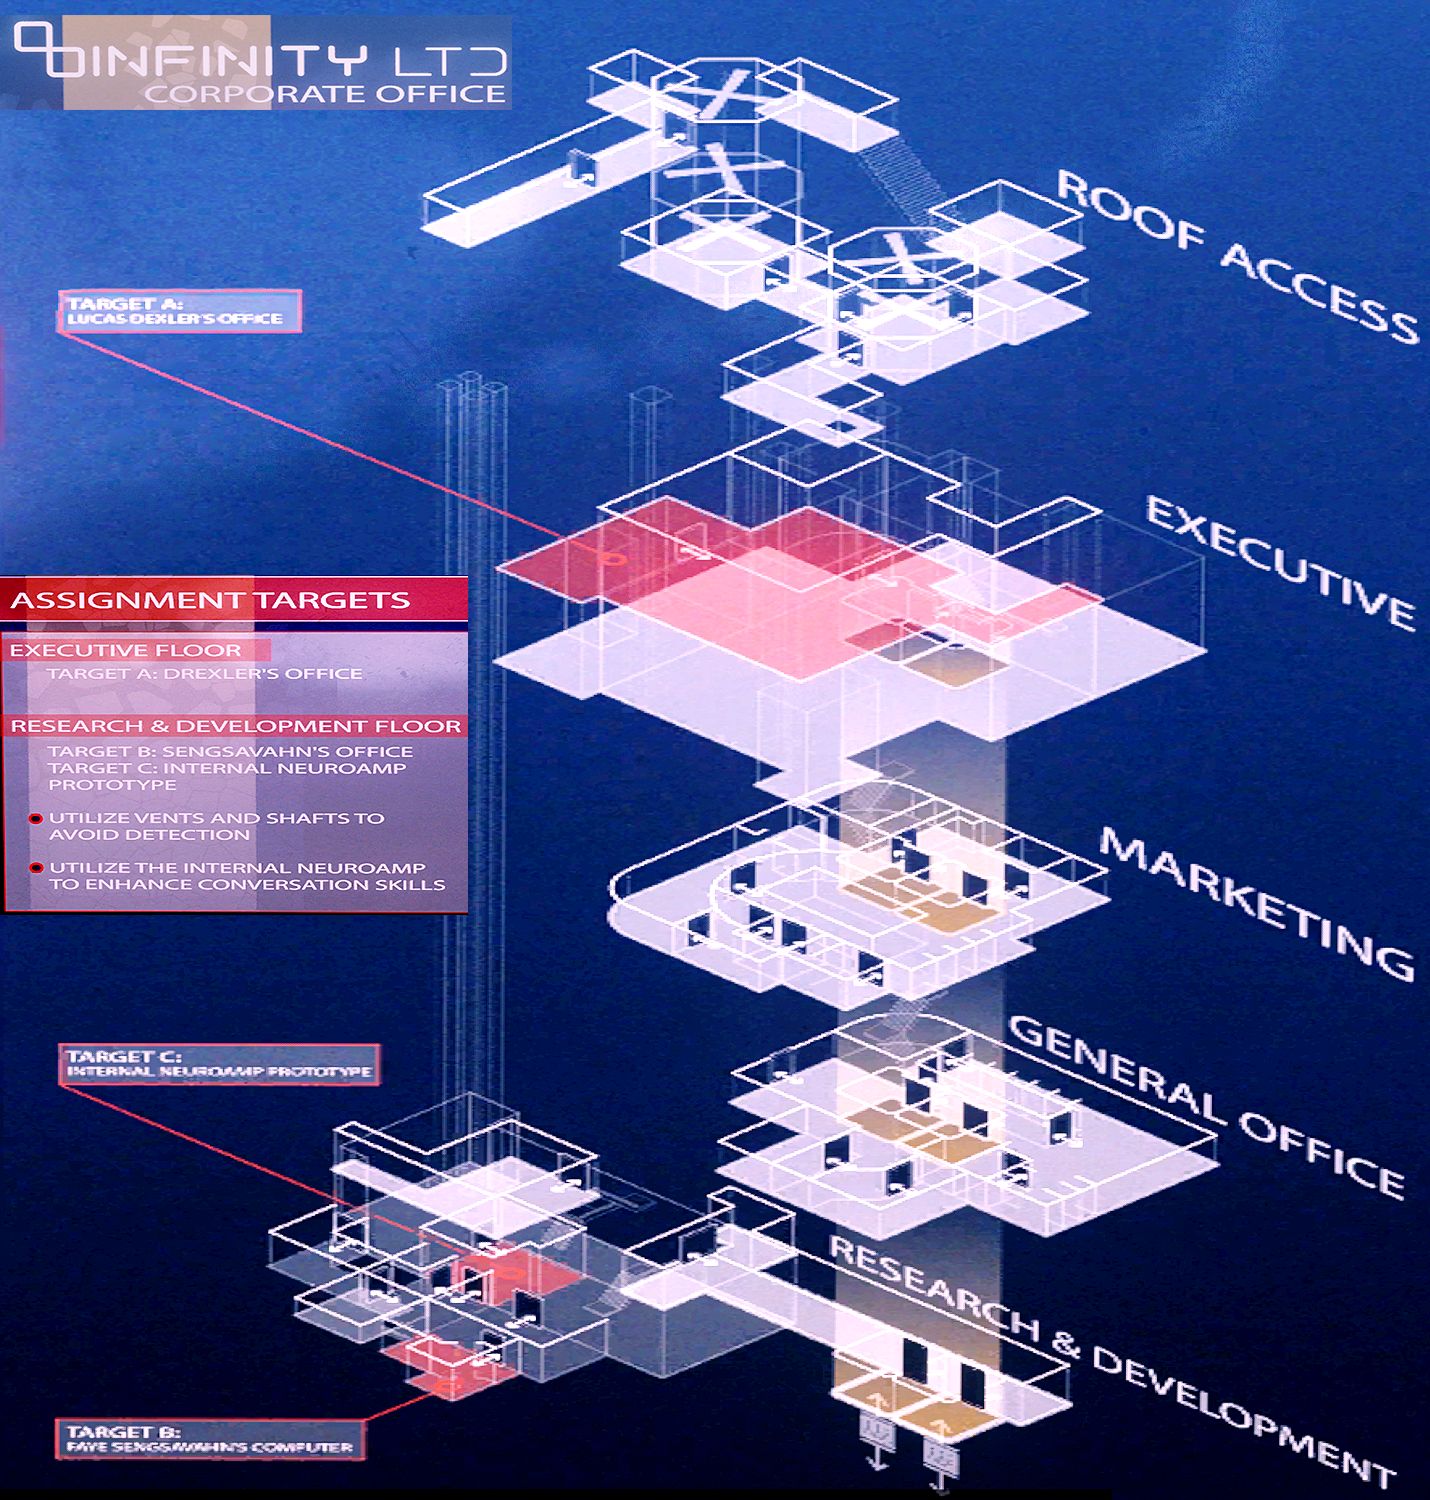 Infinity LTD Map For 'Sabotage' Ryujin Industries Mission - Starfield